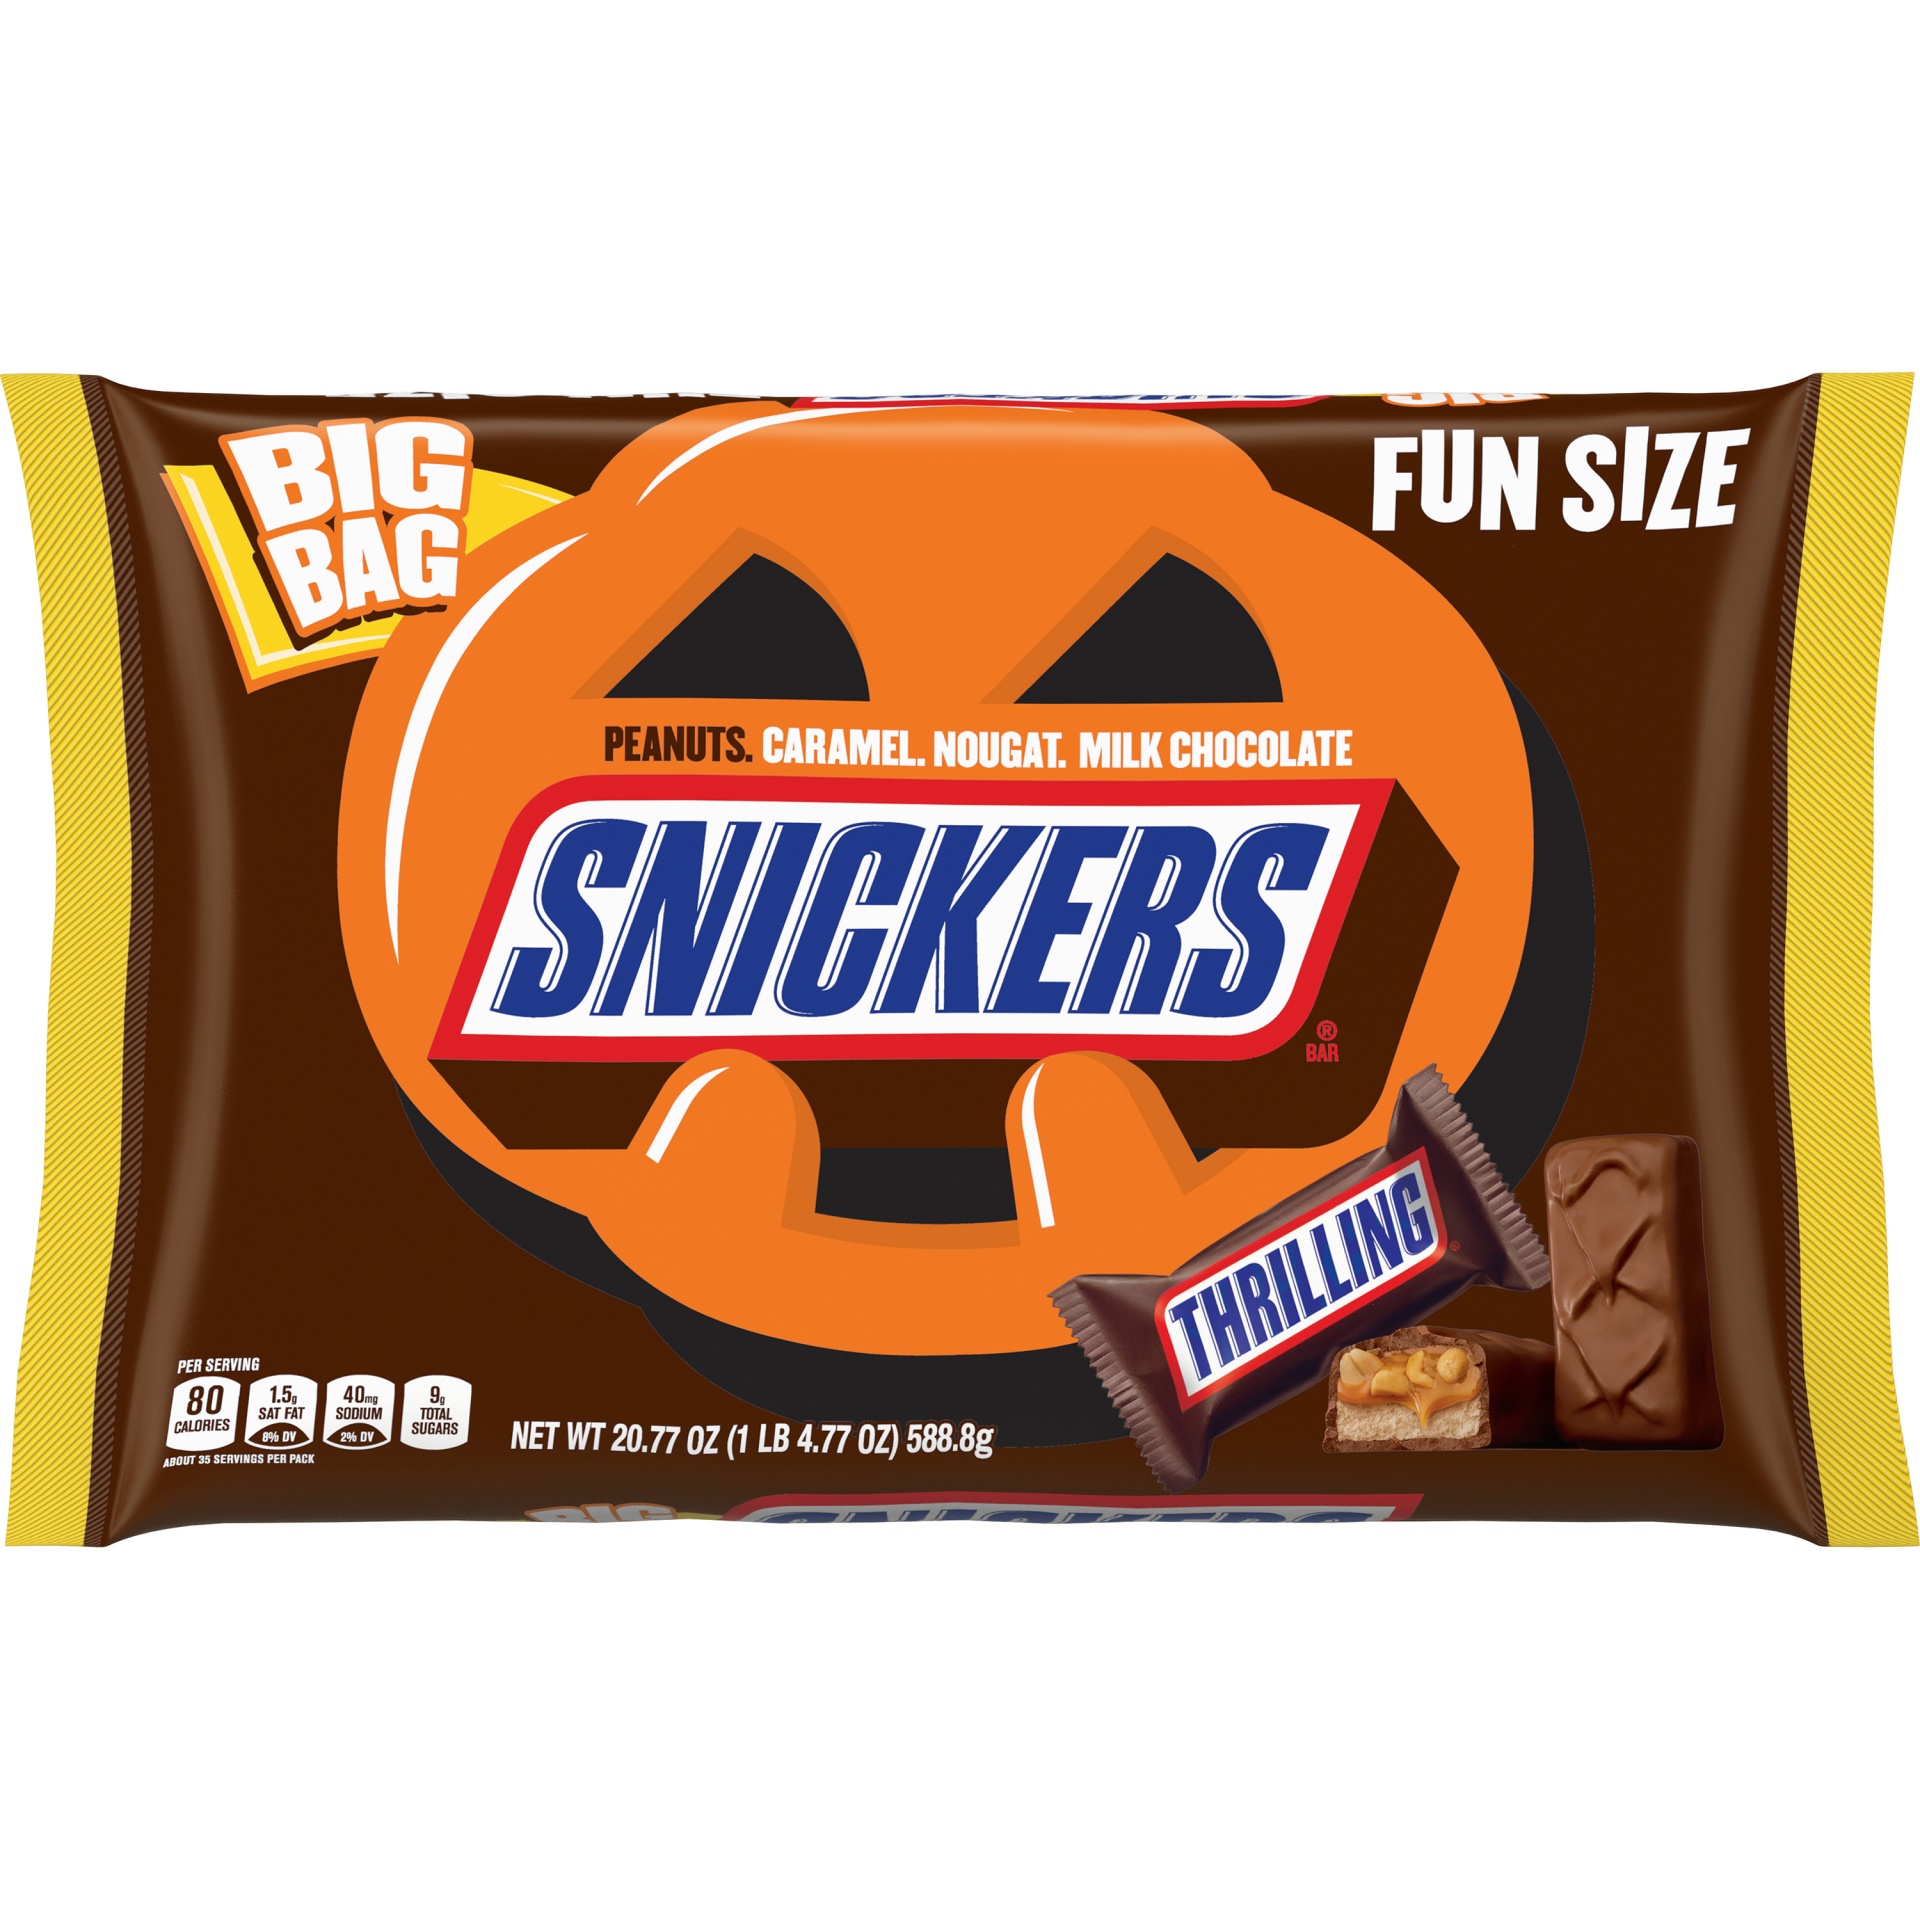 SNICKERS Halloweendy Fun Size Chocolate Bars 20.77 oz